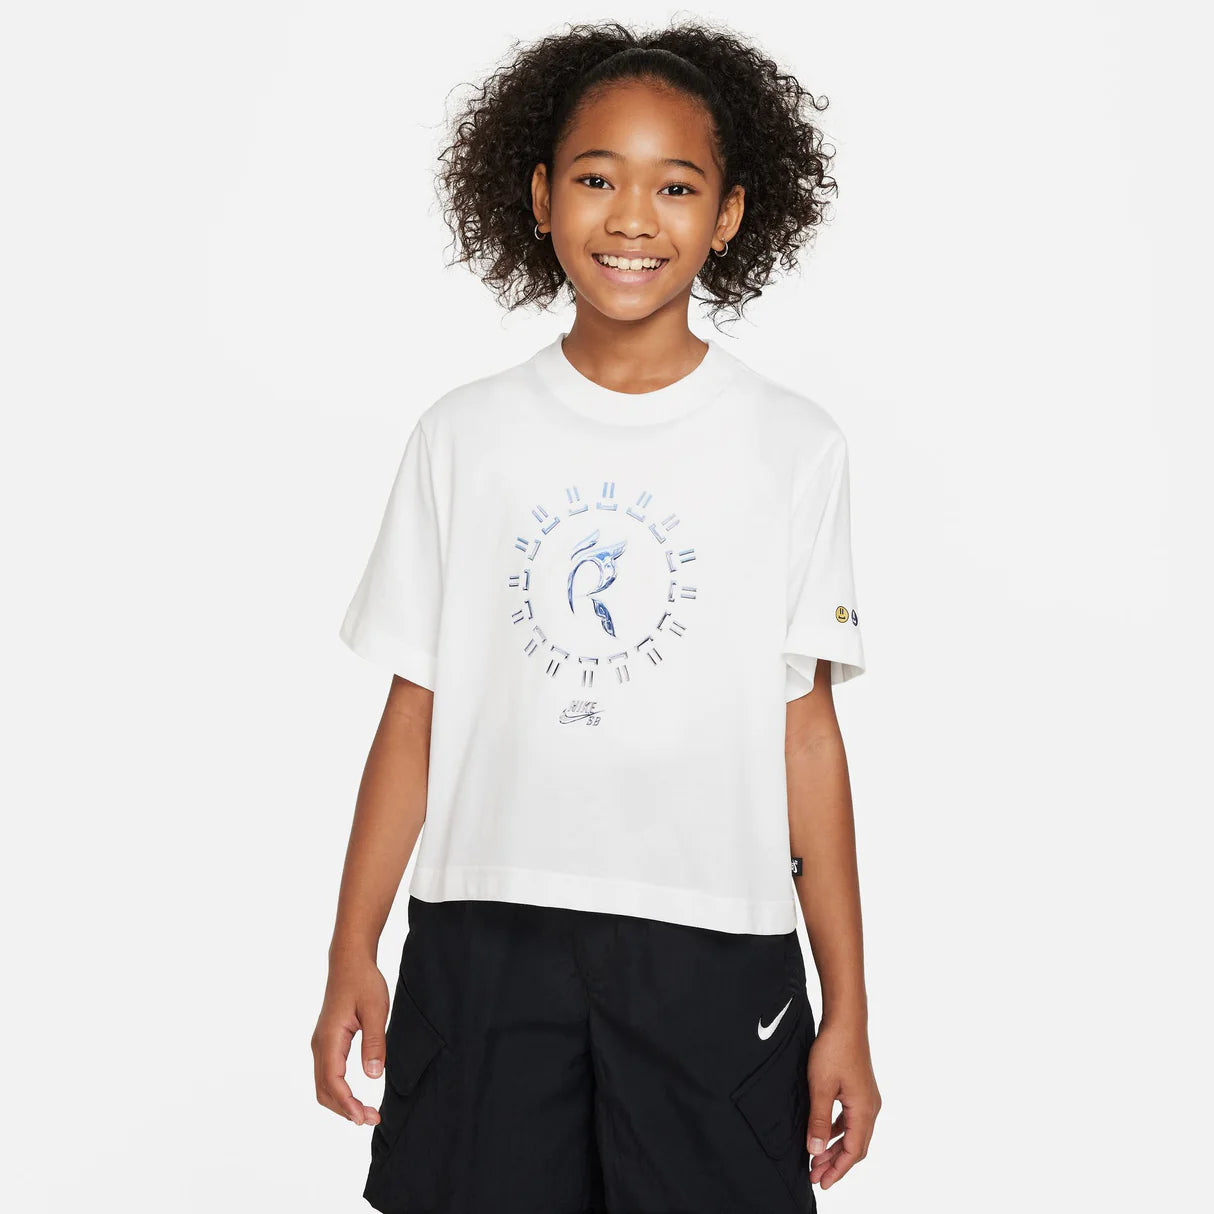 Nike SB Rayssa Leal Kids Girls Boxy Tee - White